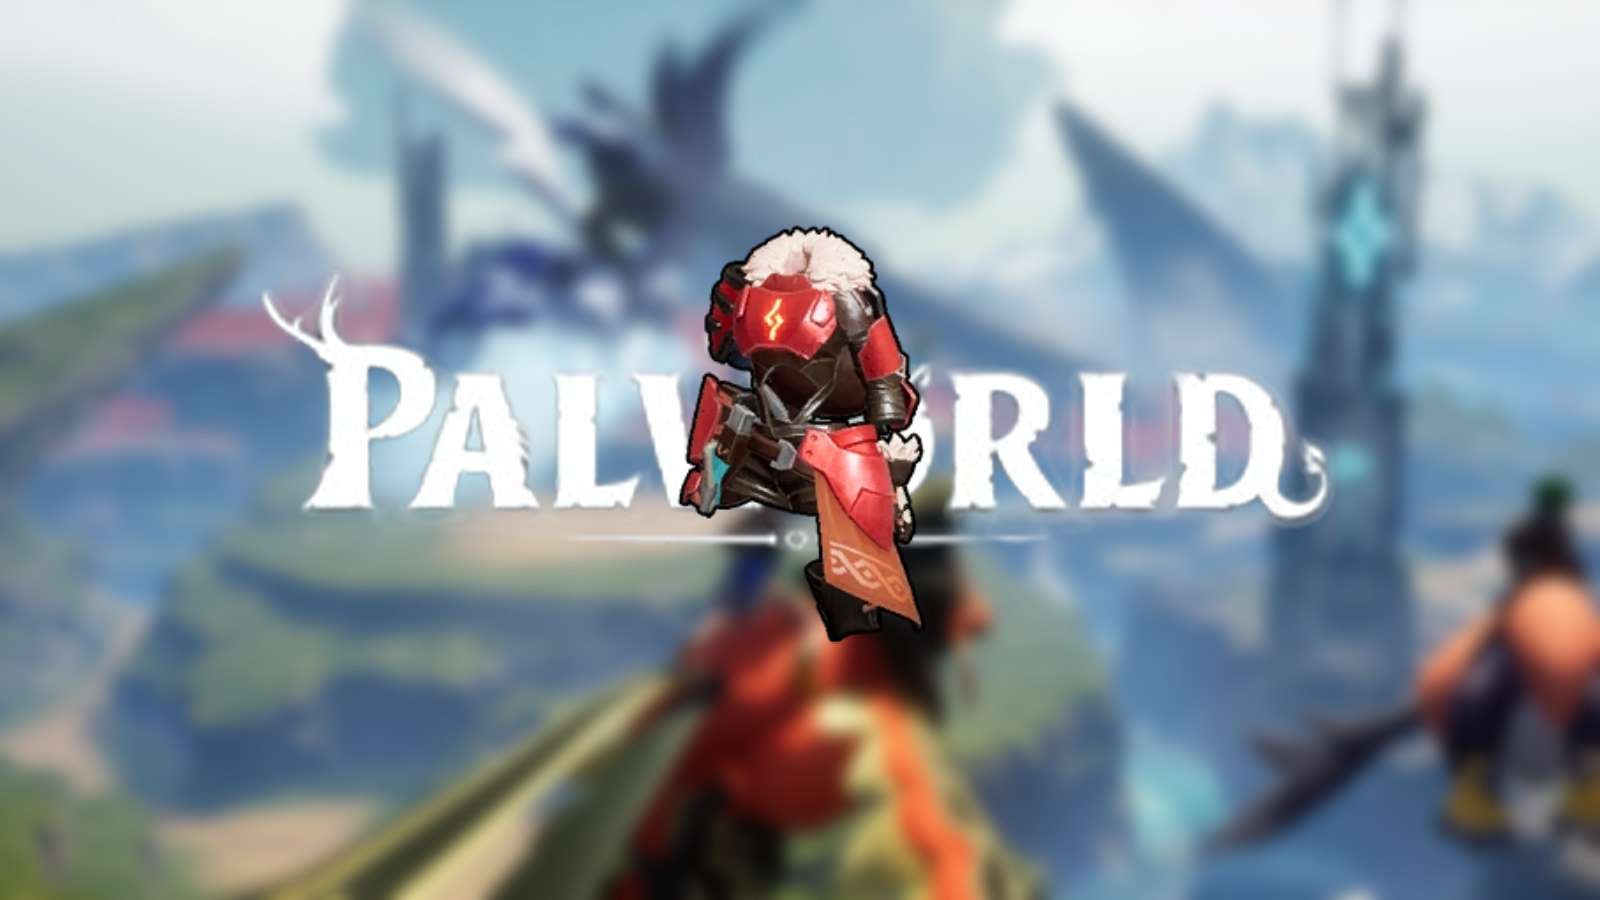 palworld heat resistant armor